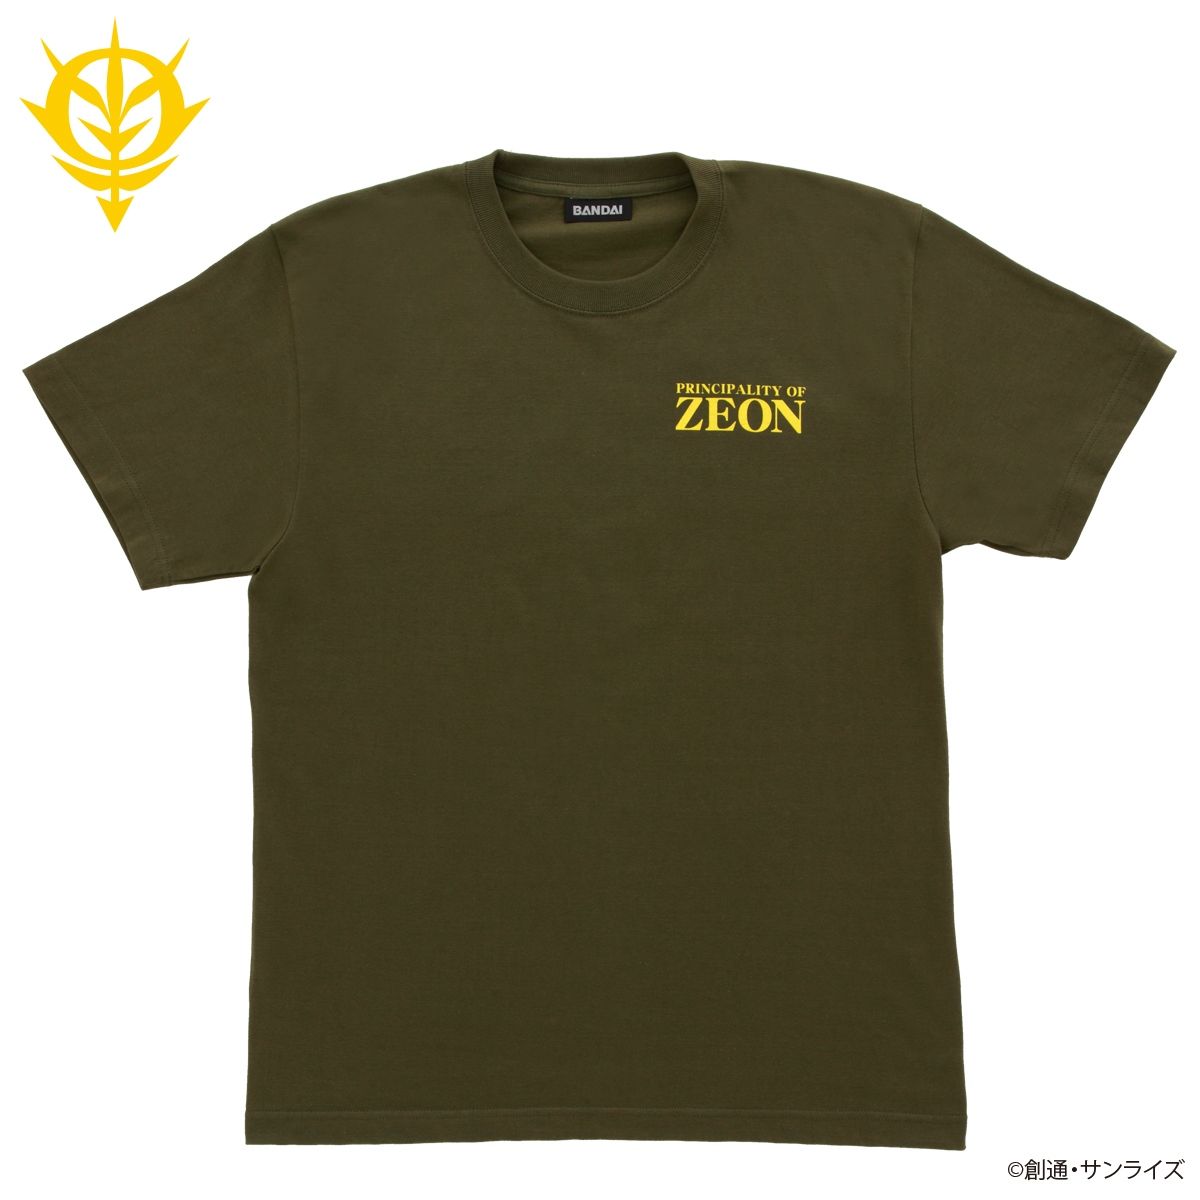 Mobile Suit Gundam Zeon T-shirt